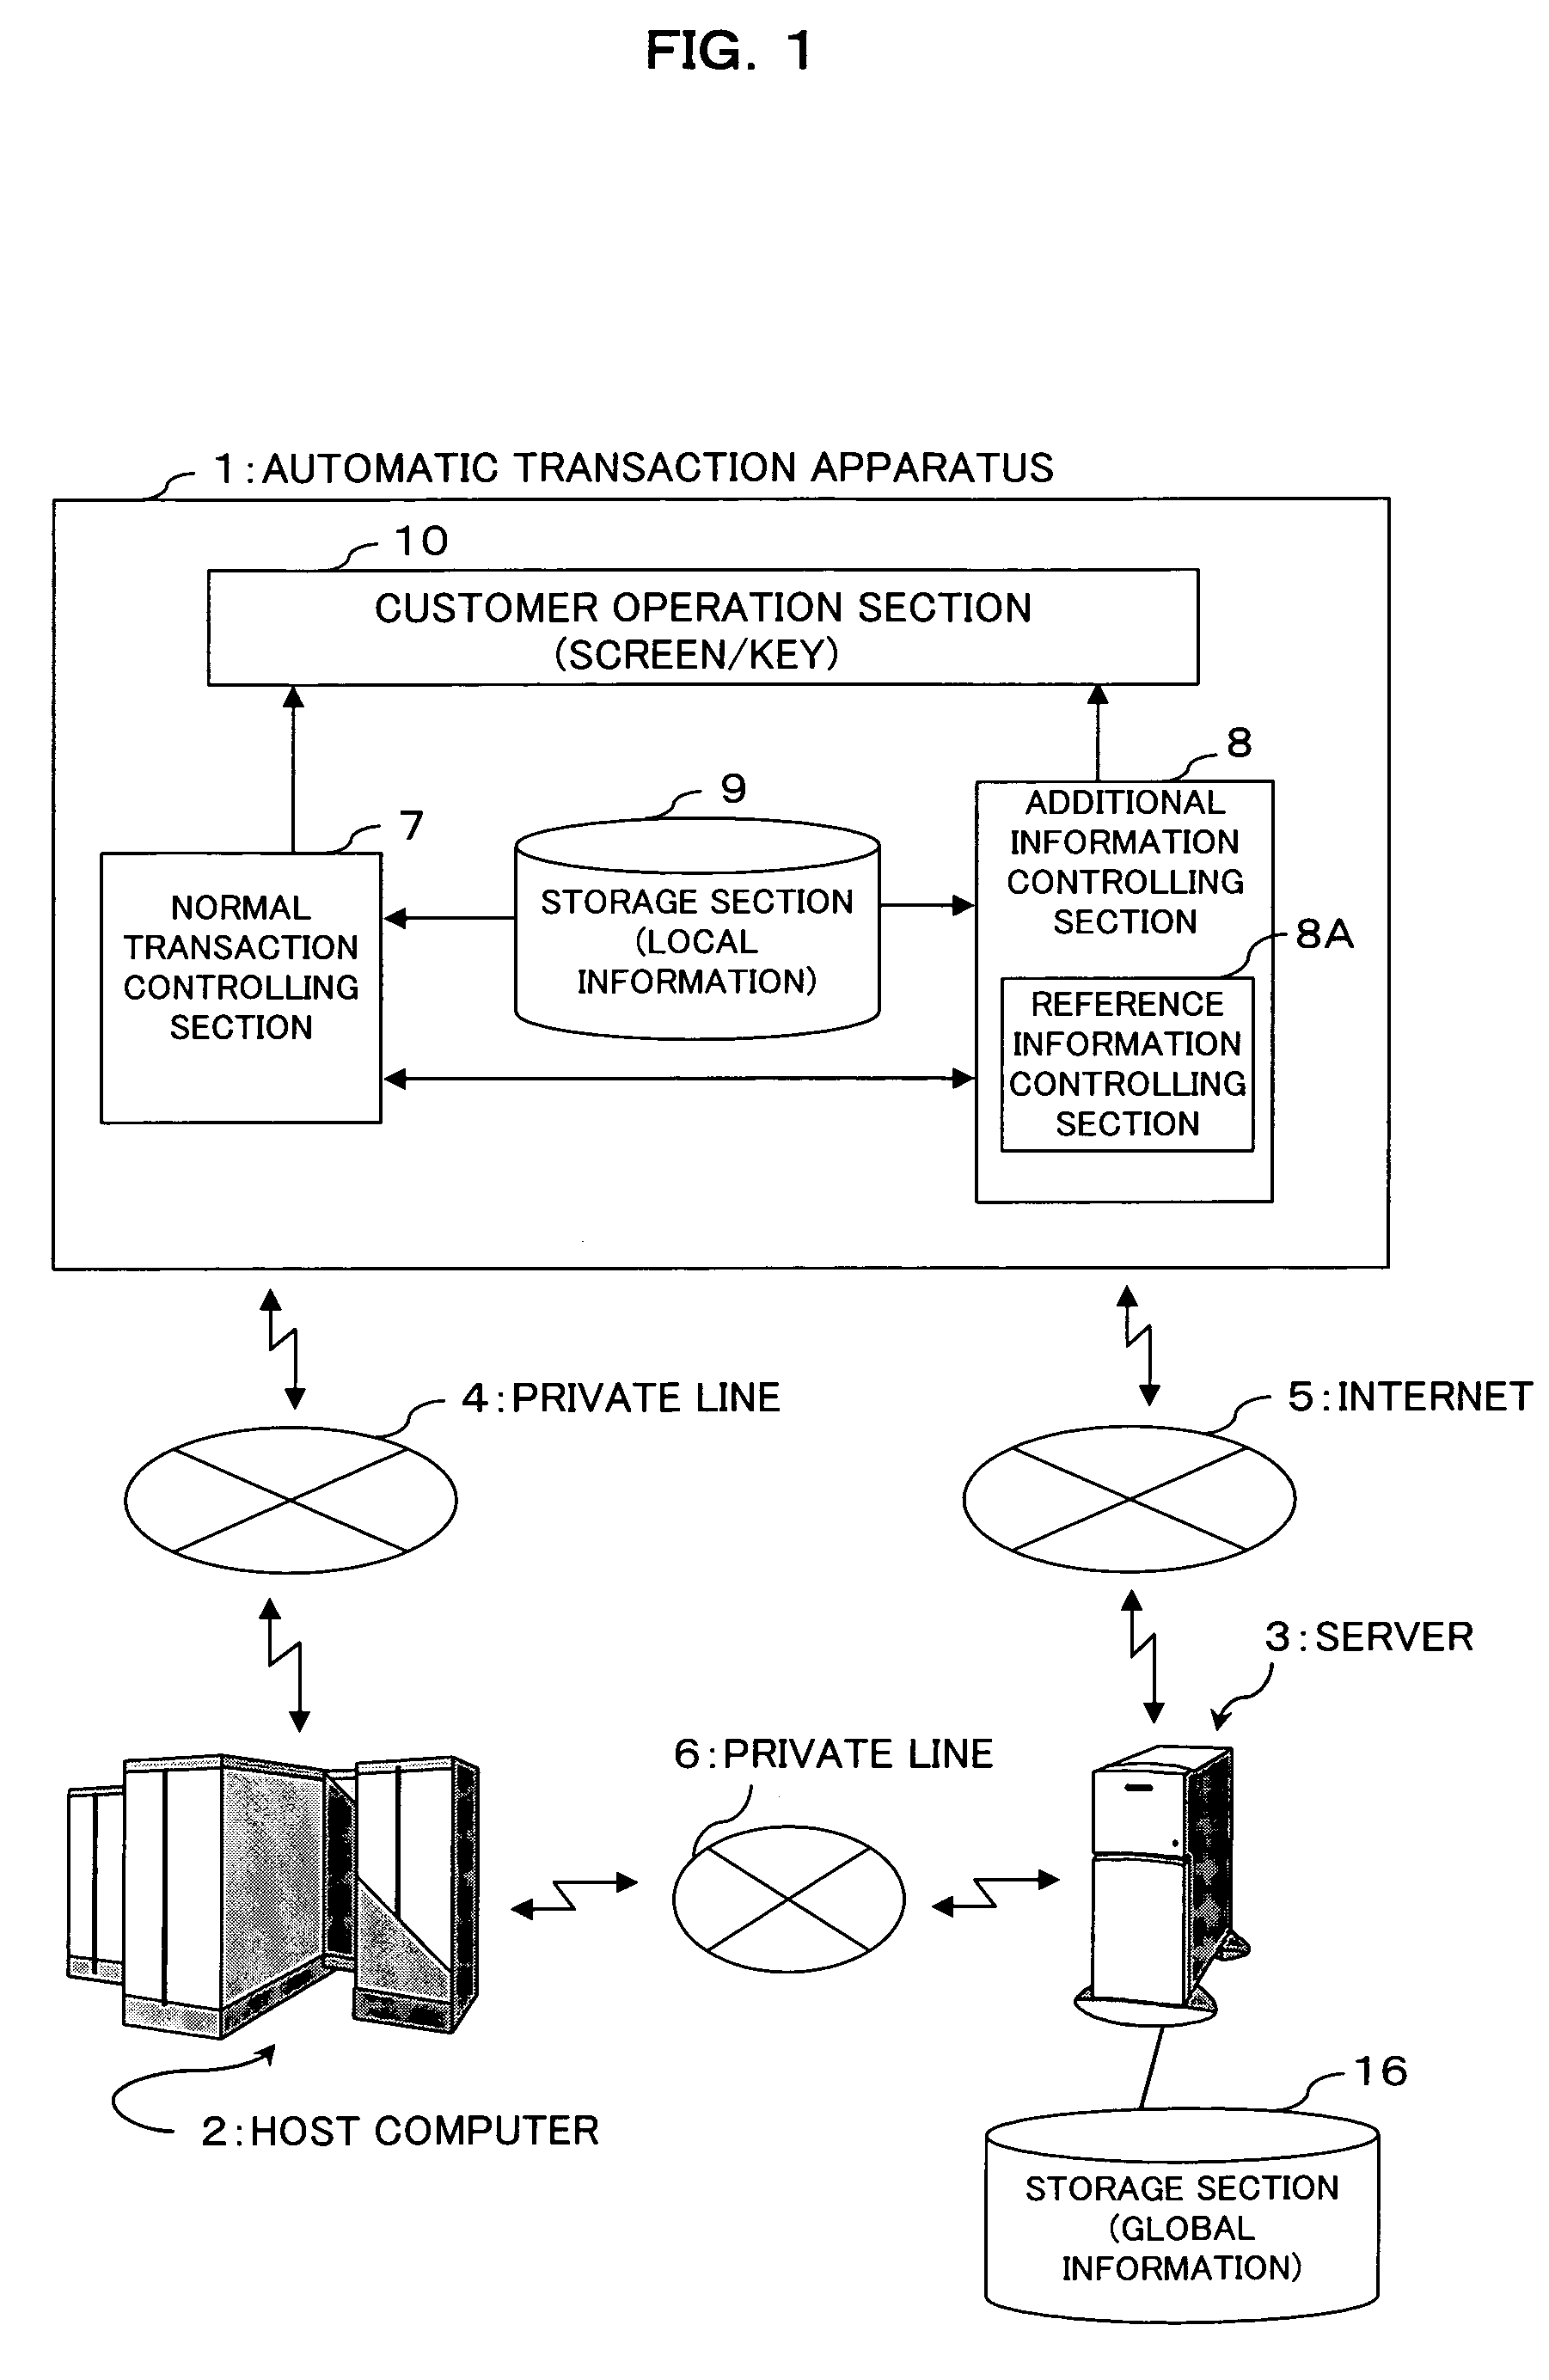 Automatic transaction apparatus